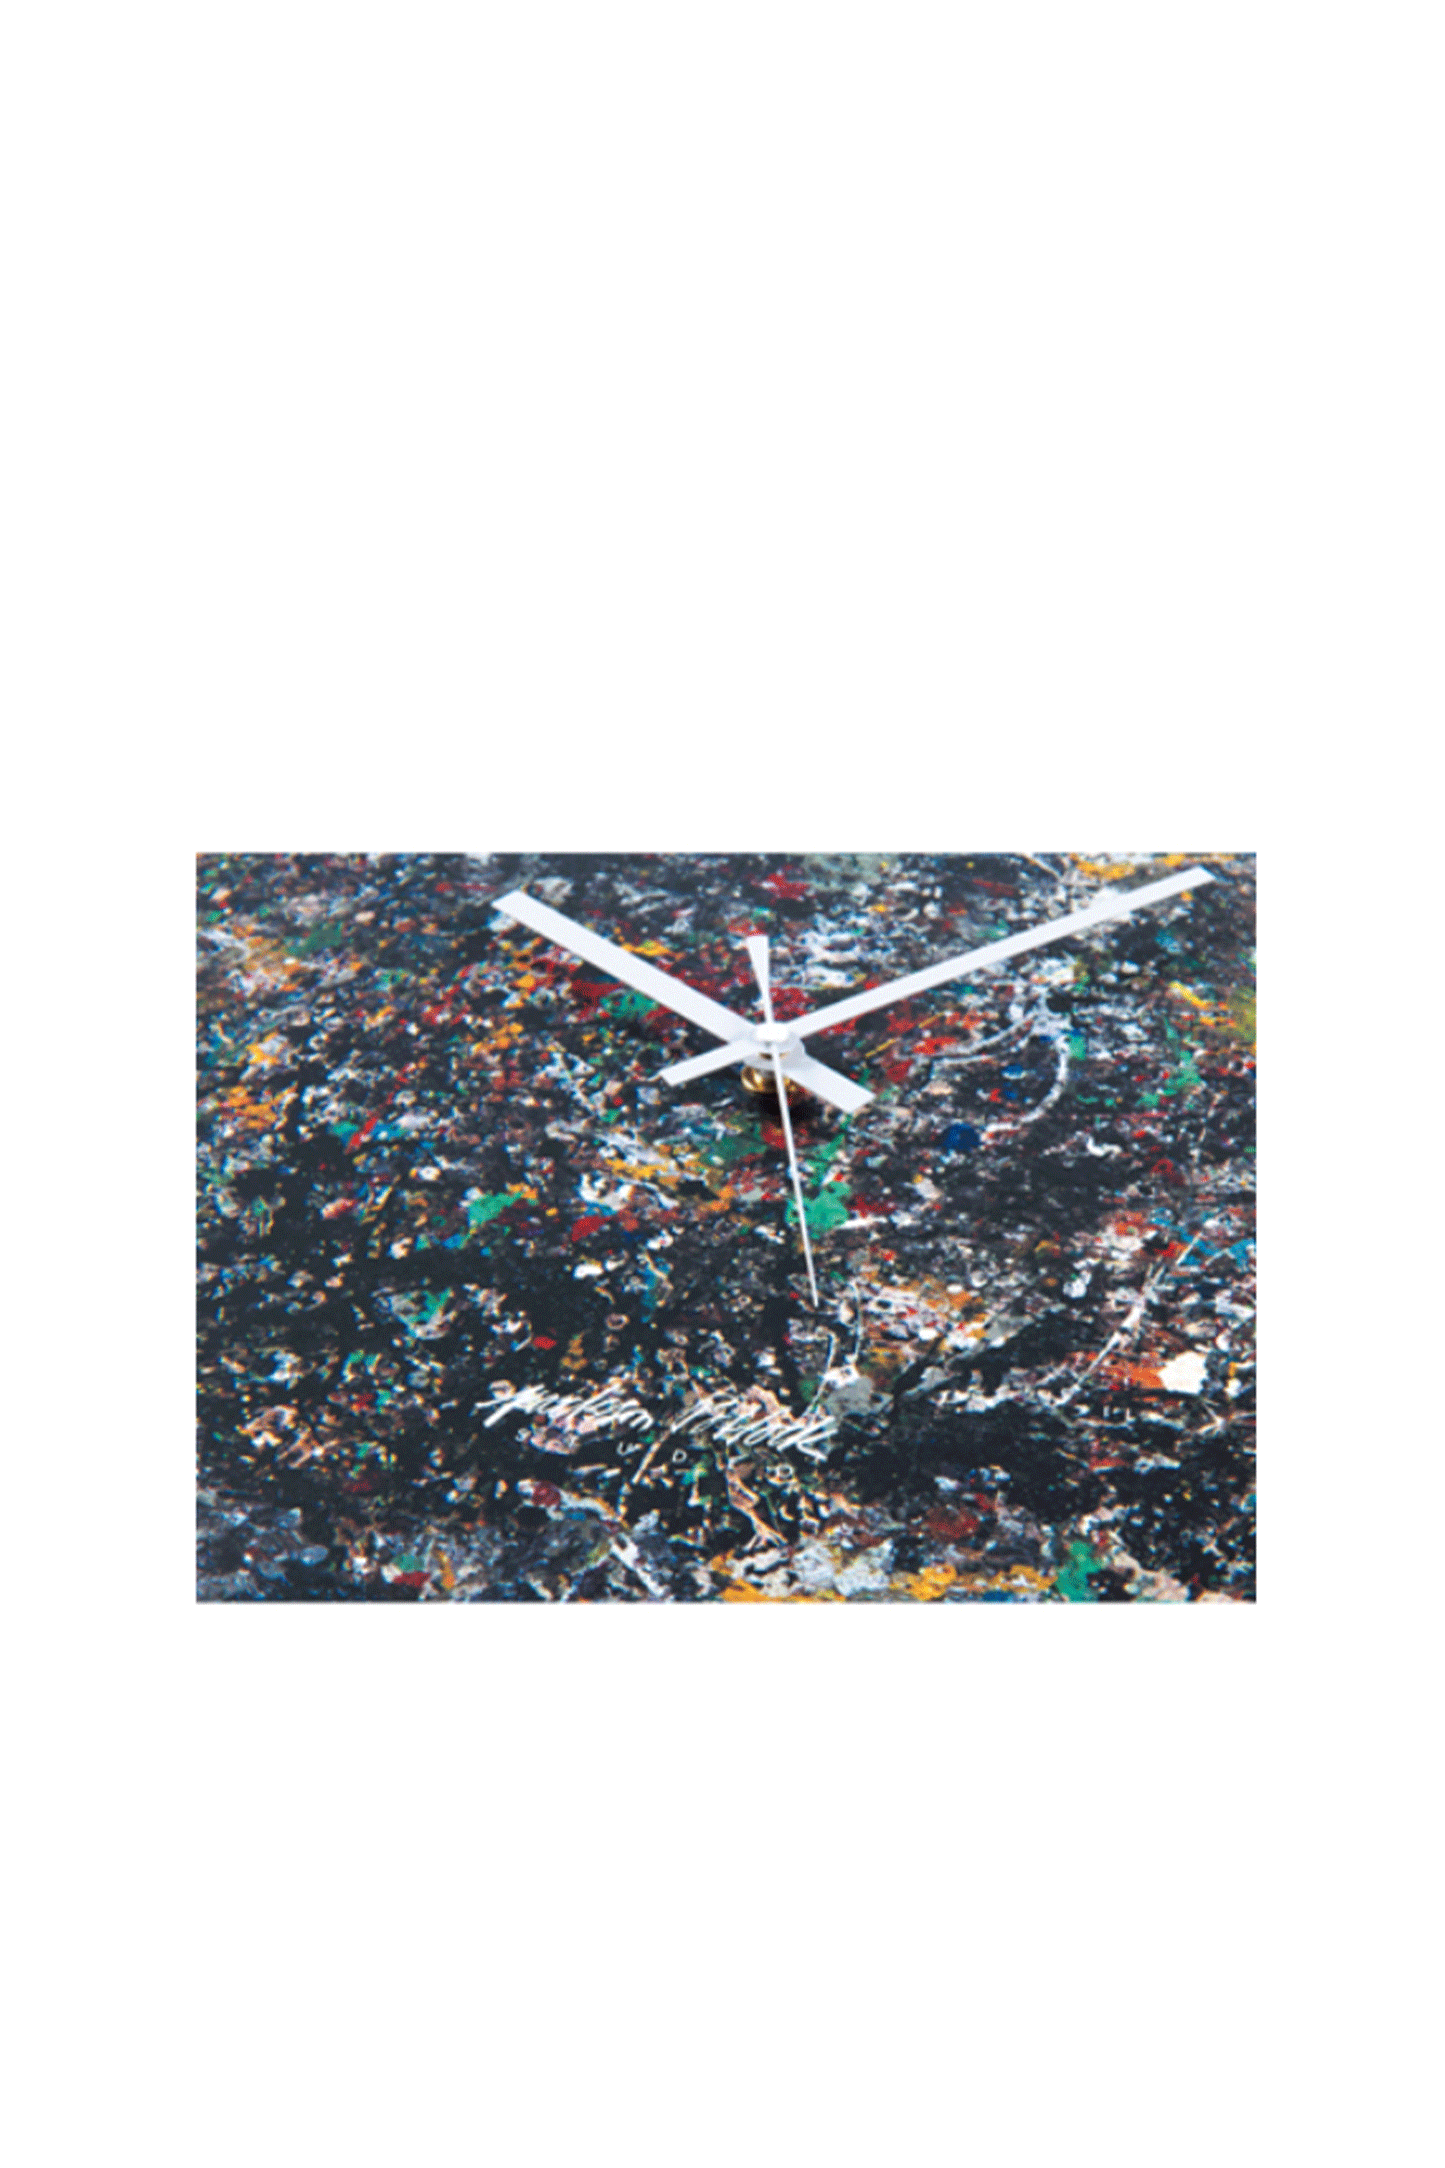 WALL CLOCK "Jackson Pollock Studio 03" made by KARIMOKU (時計)